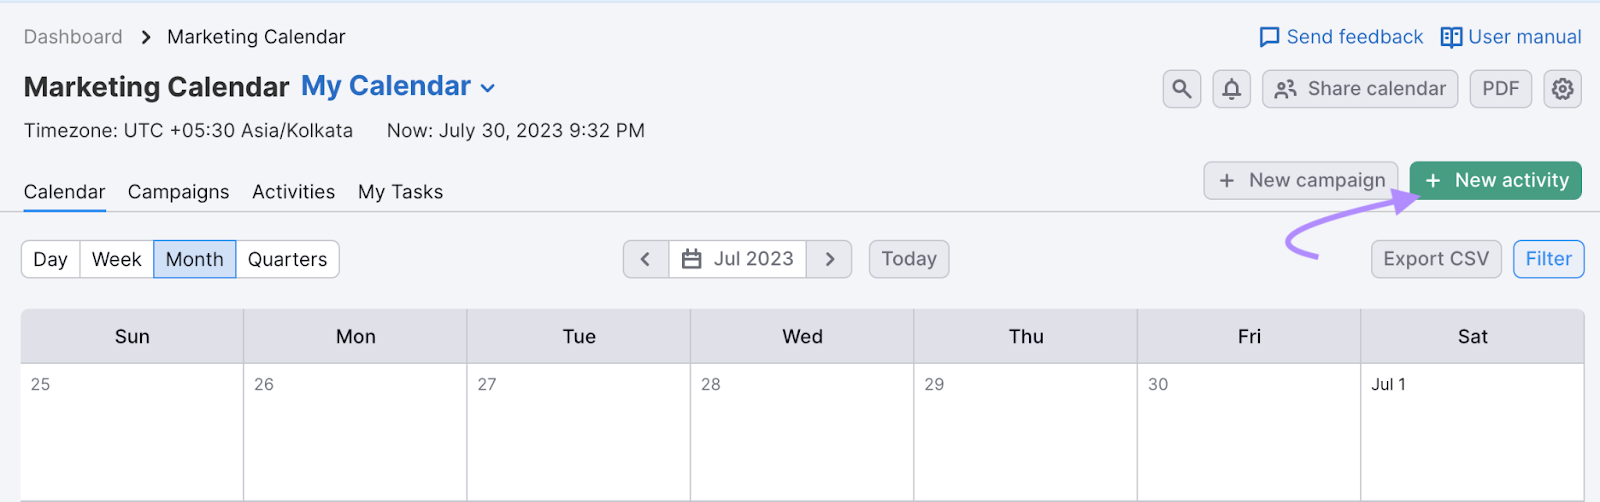 “+ New activity” button in Marketing Calendar